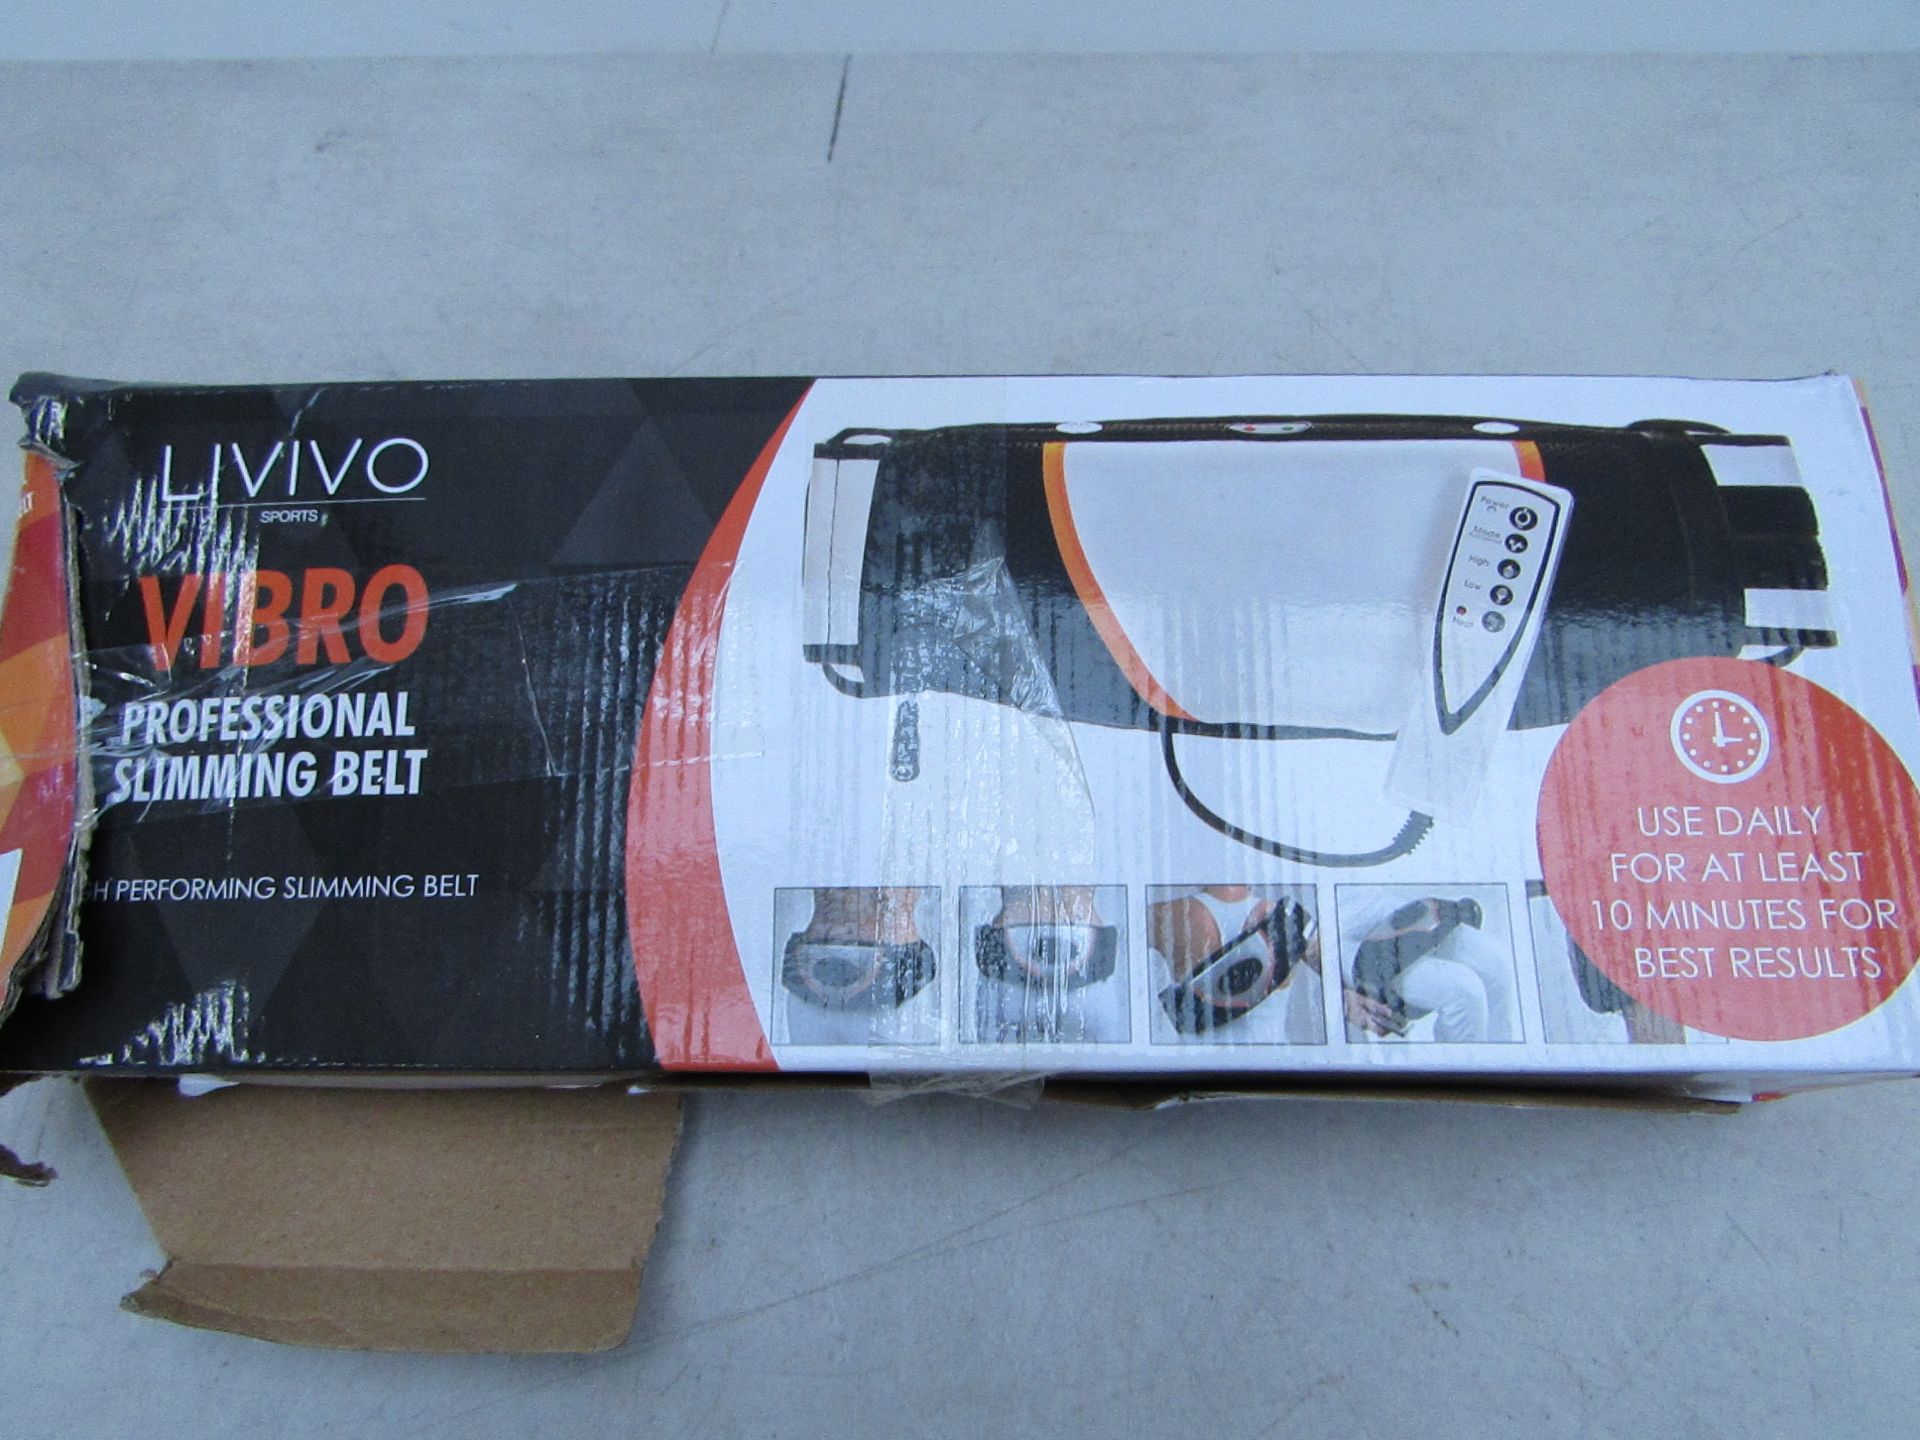 Livivo vibro slimming belt, in damaged box.